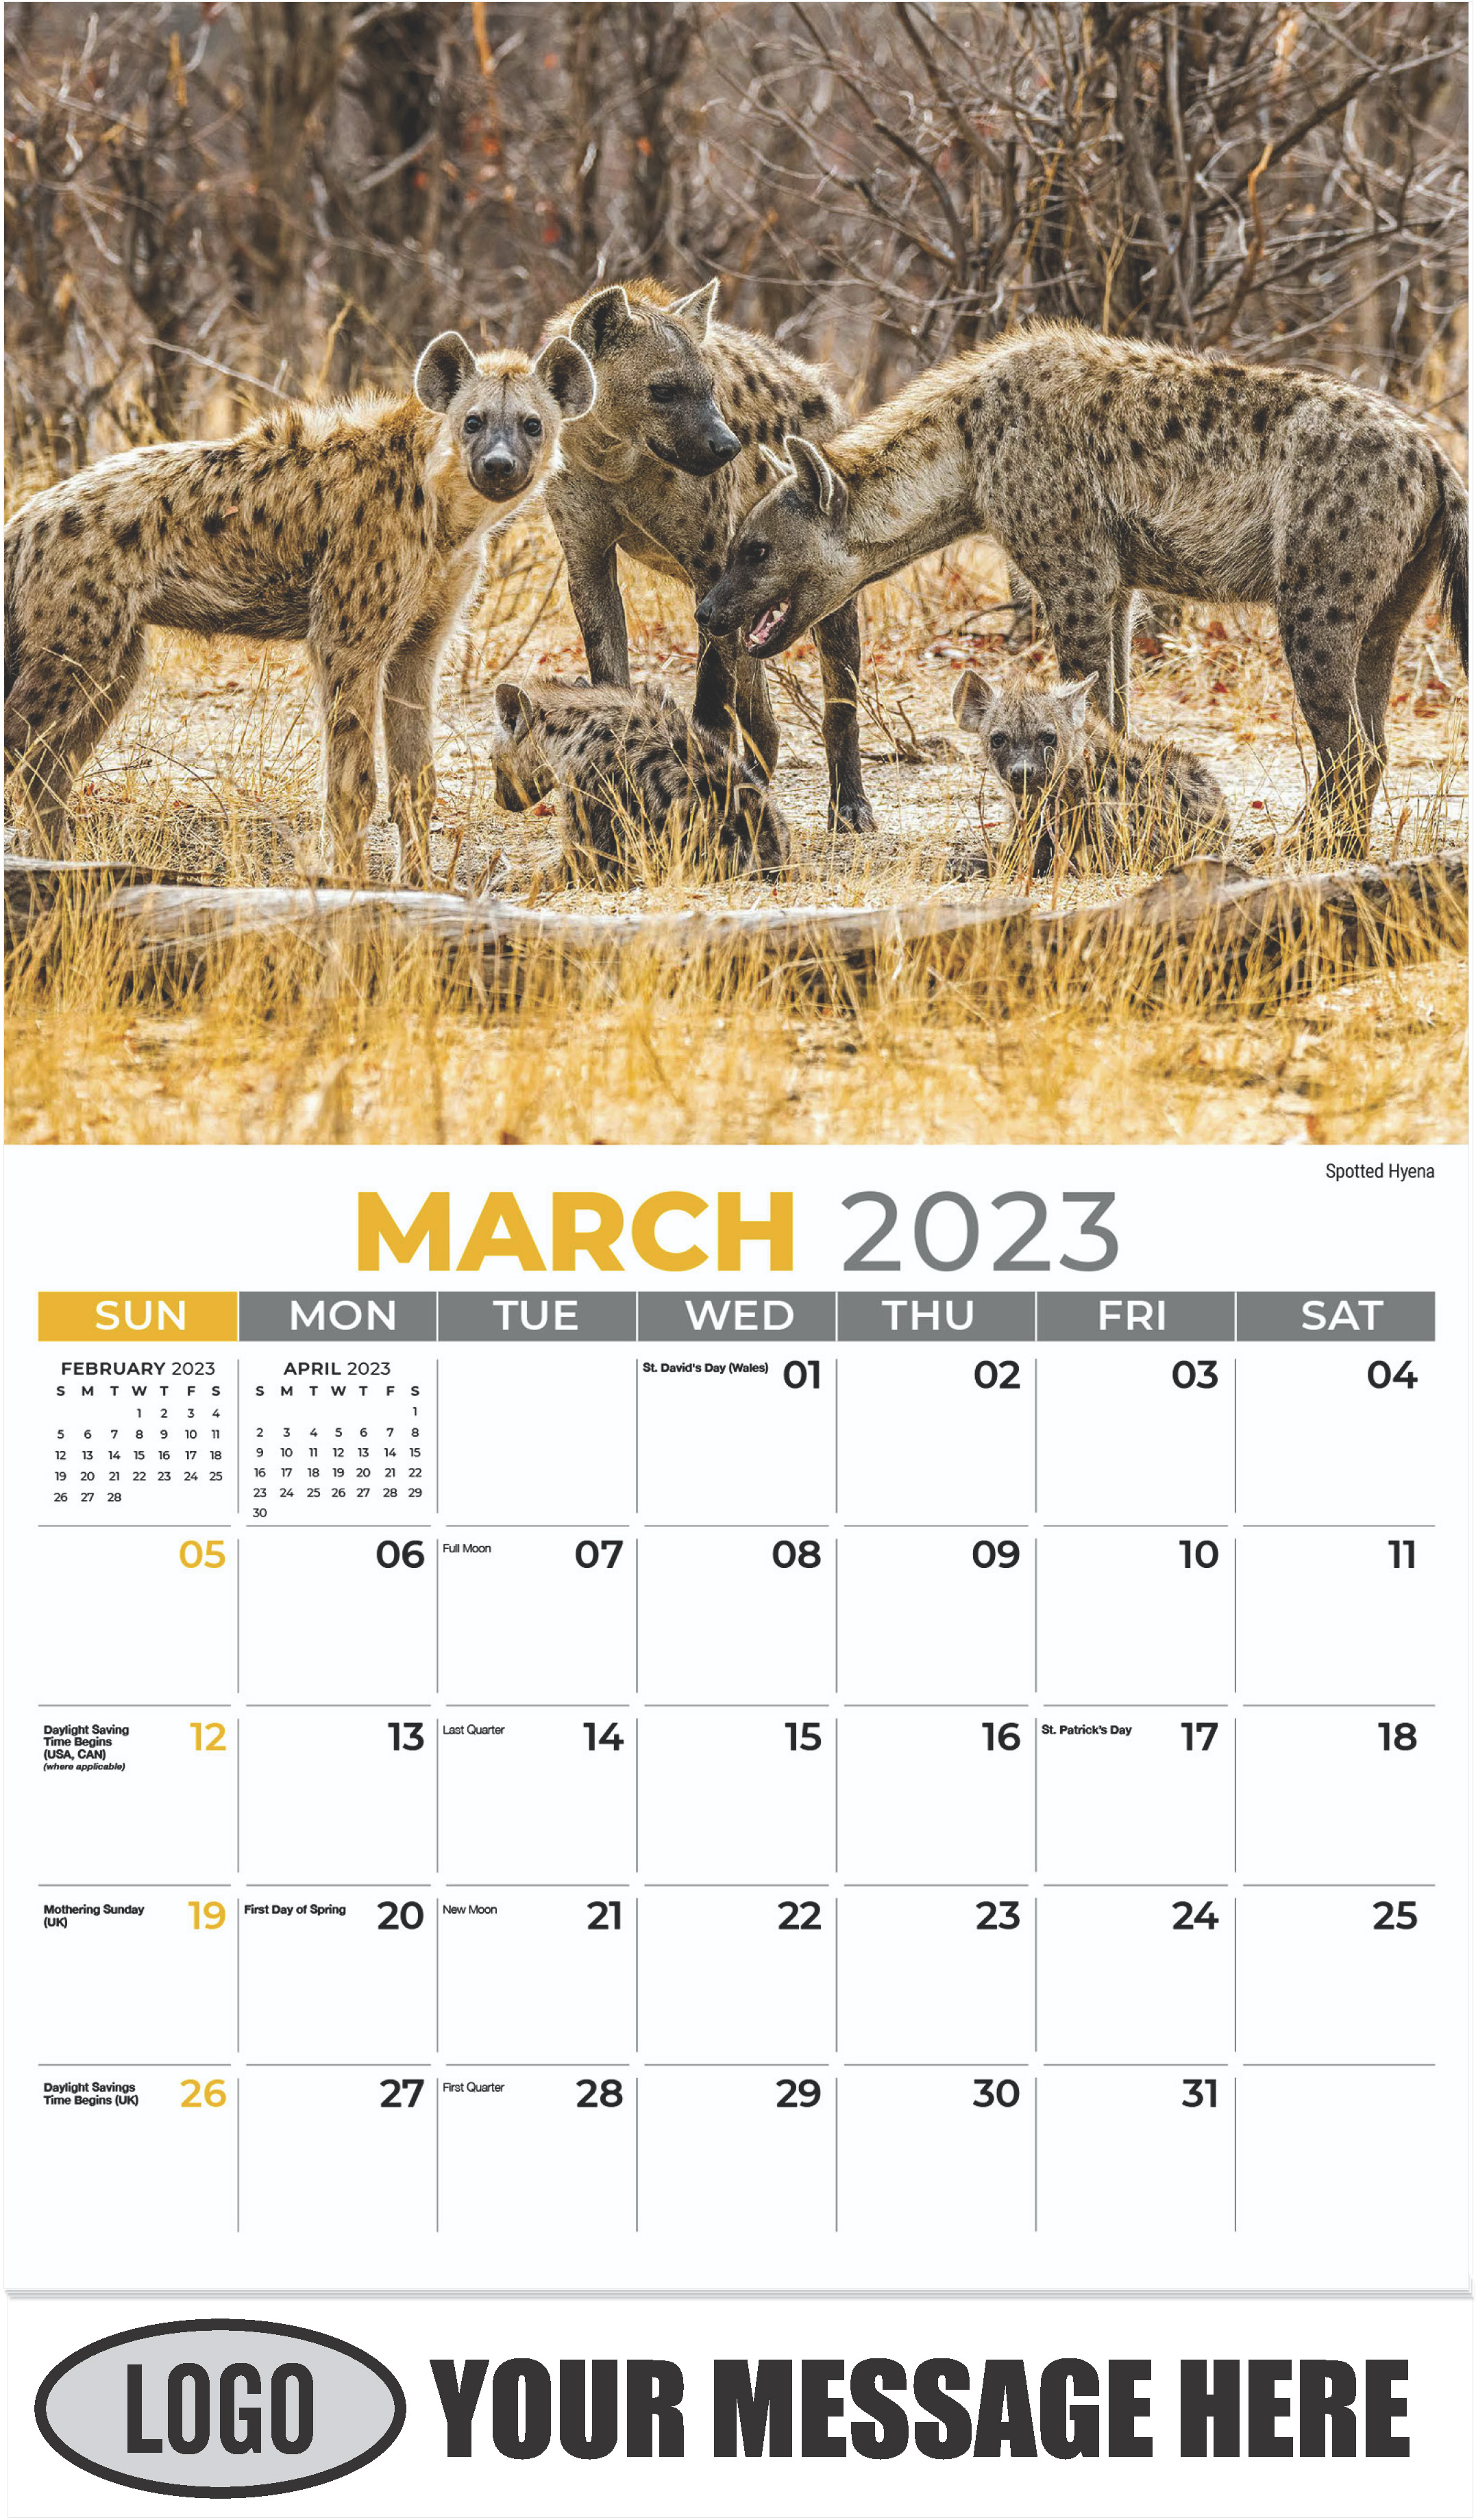 Spotted Hyena - March - International Wildlife 2023 Promotional Calendar